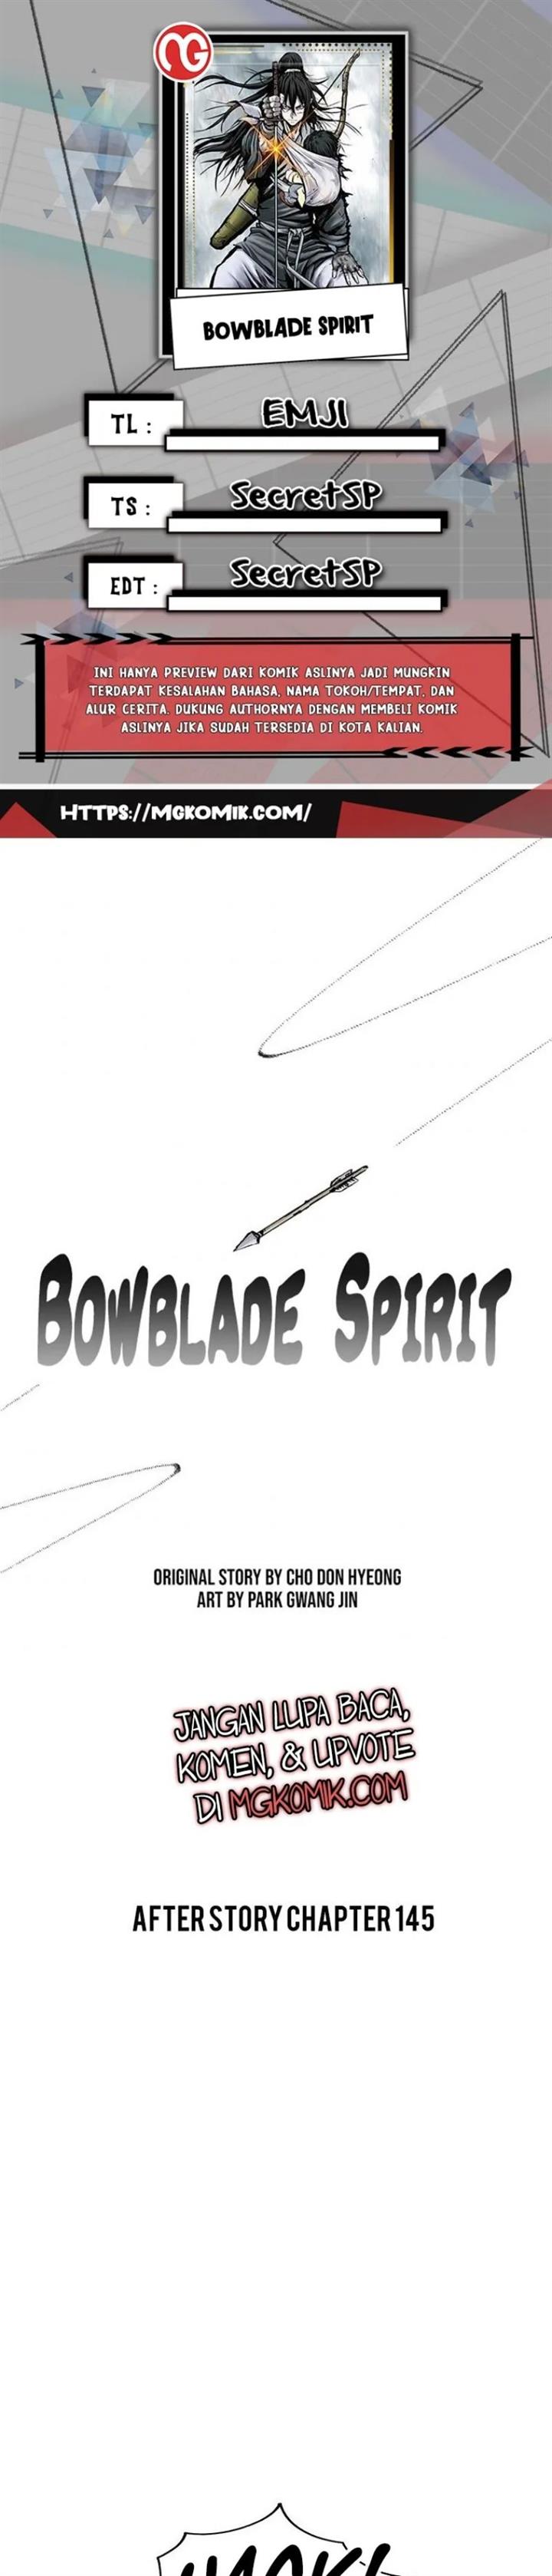 Bowblade Spirit Chapter 145